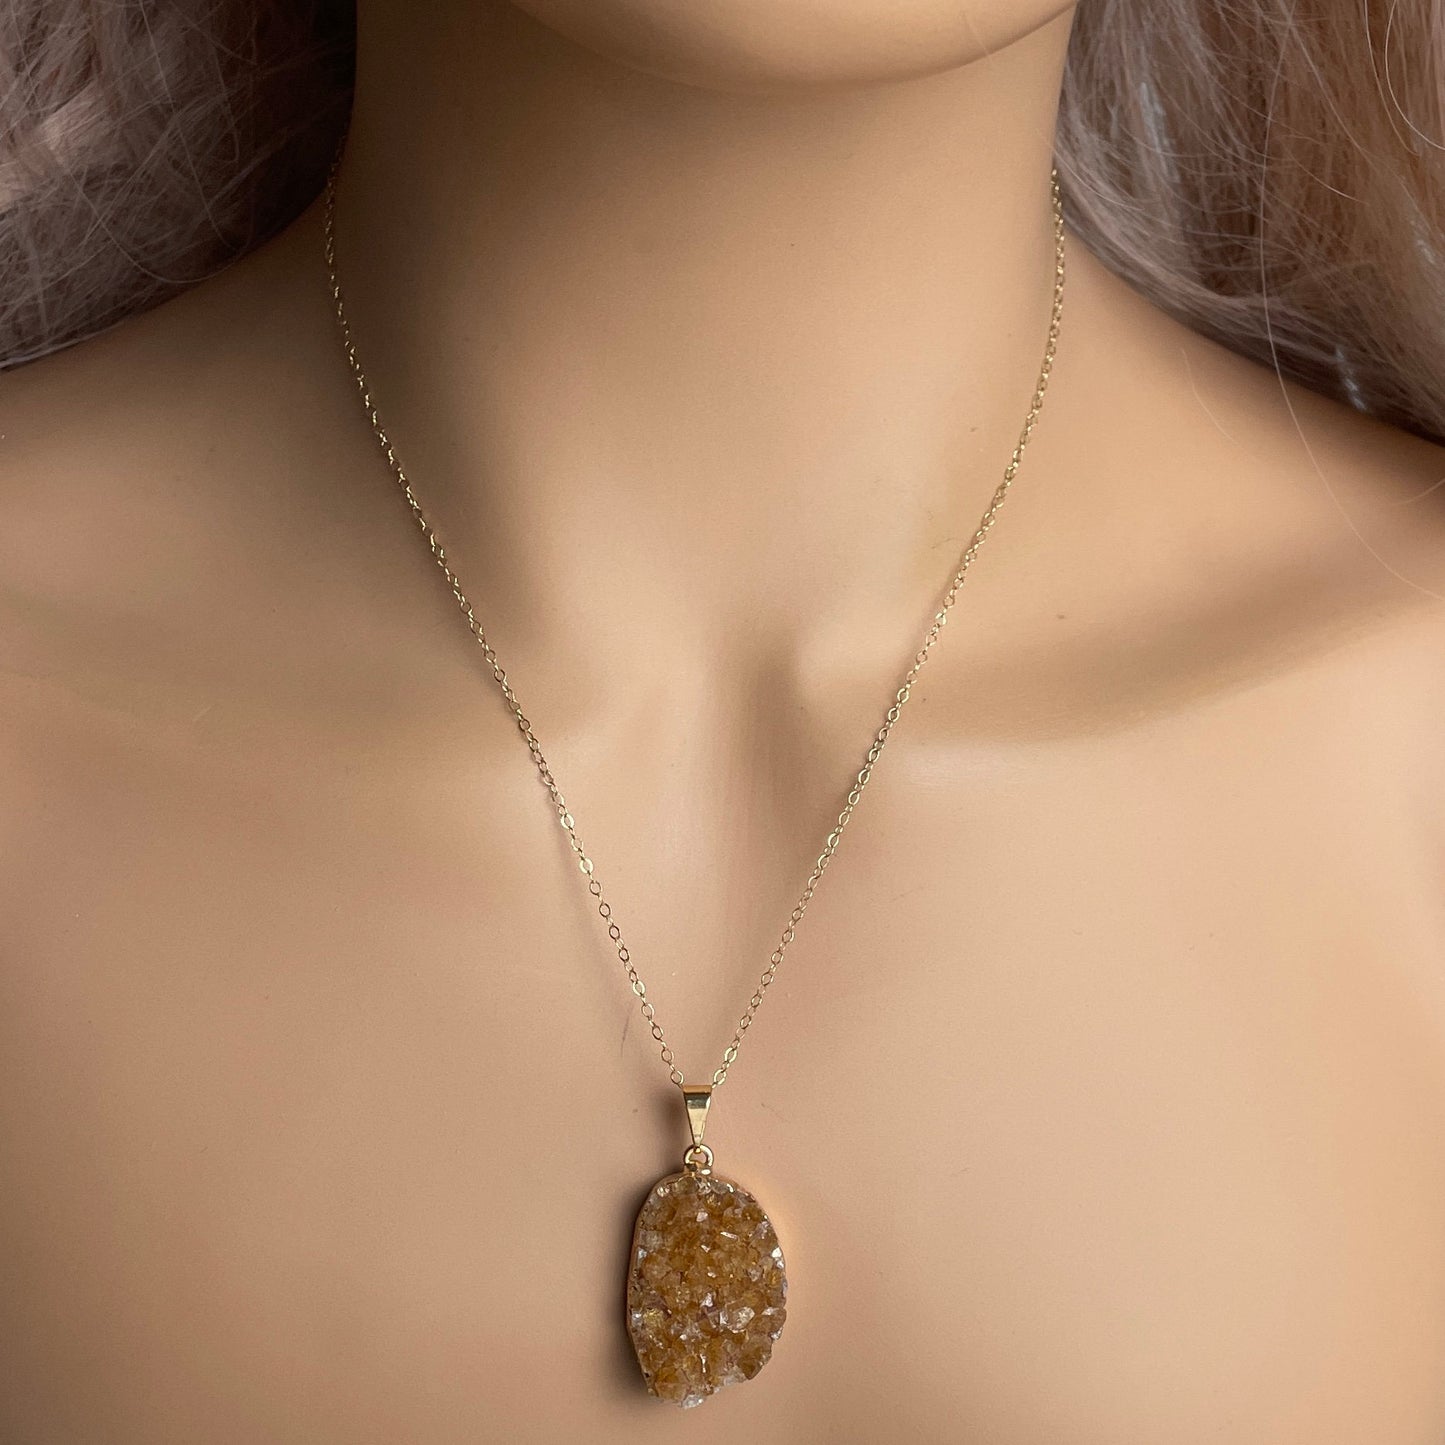 November Birthstone Jewelry - Raw Citrine Necklace Gold - Citrine Crystal Pendant - G15-223